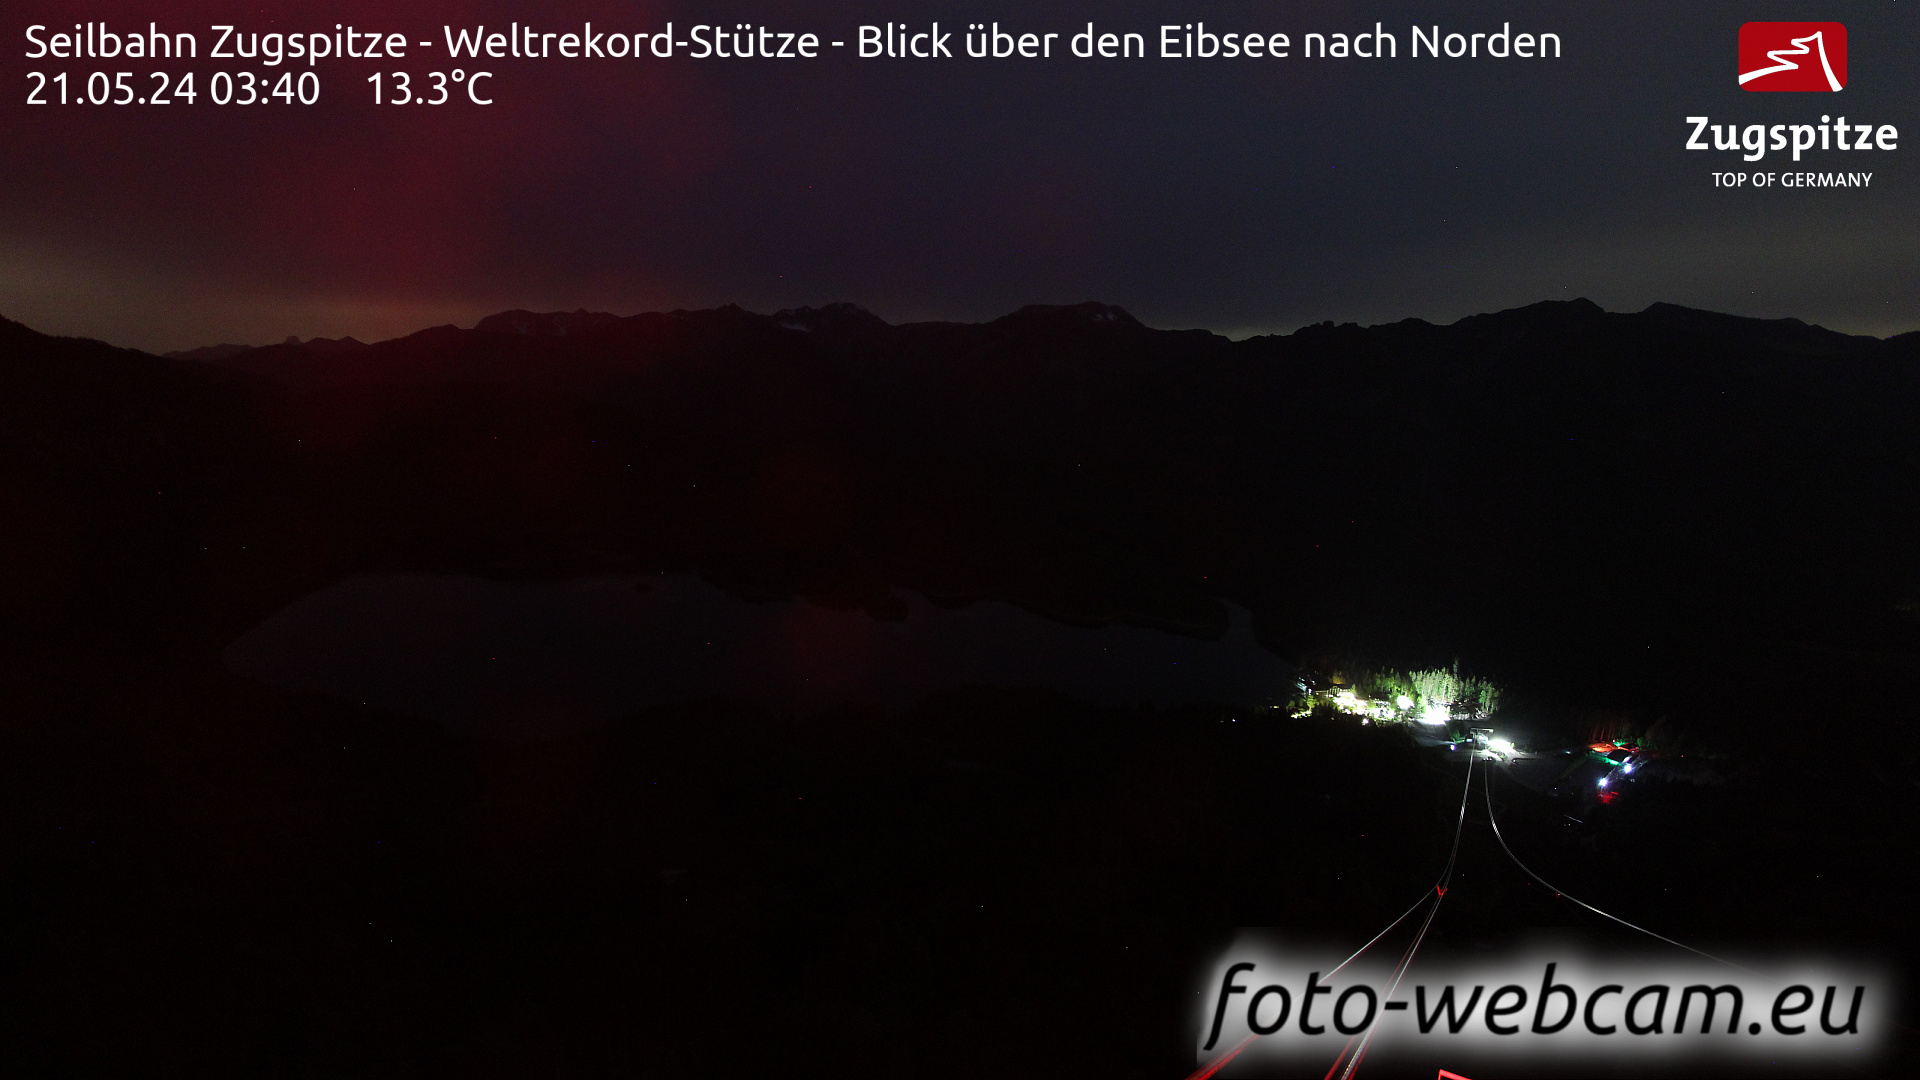 Zugspitze Ven. 03:49